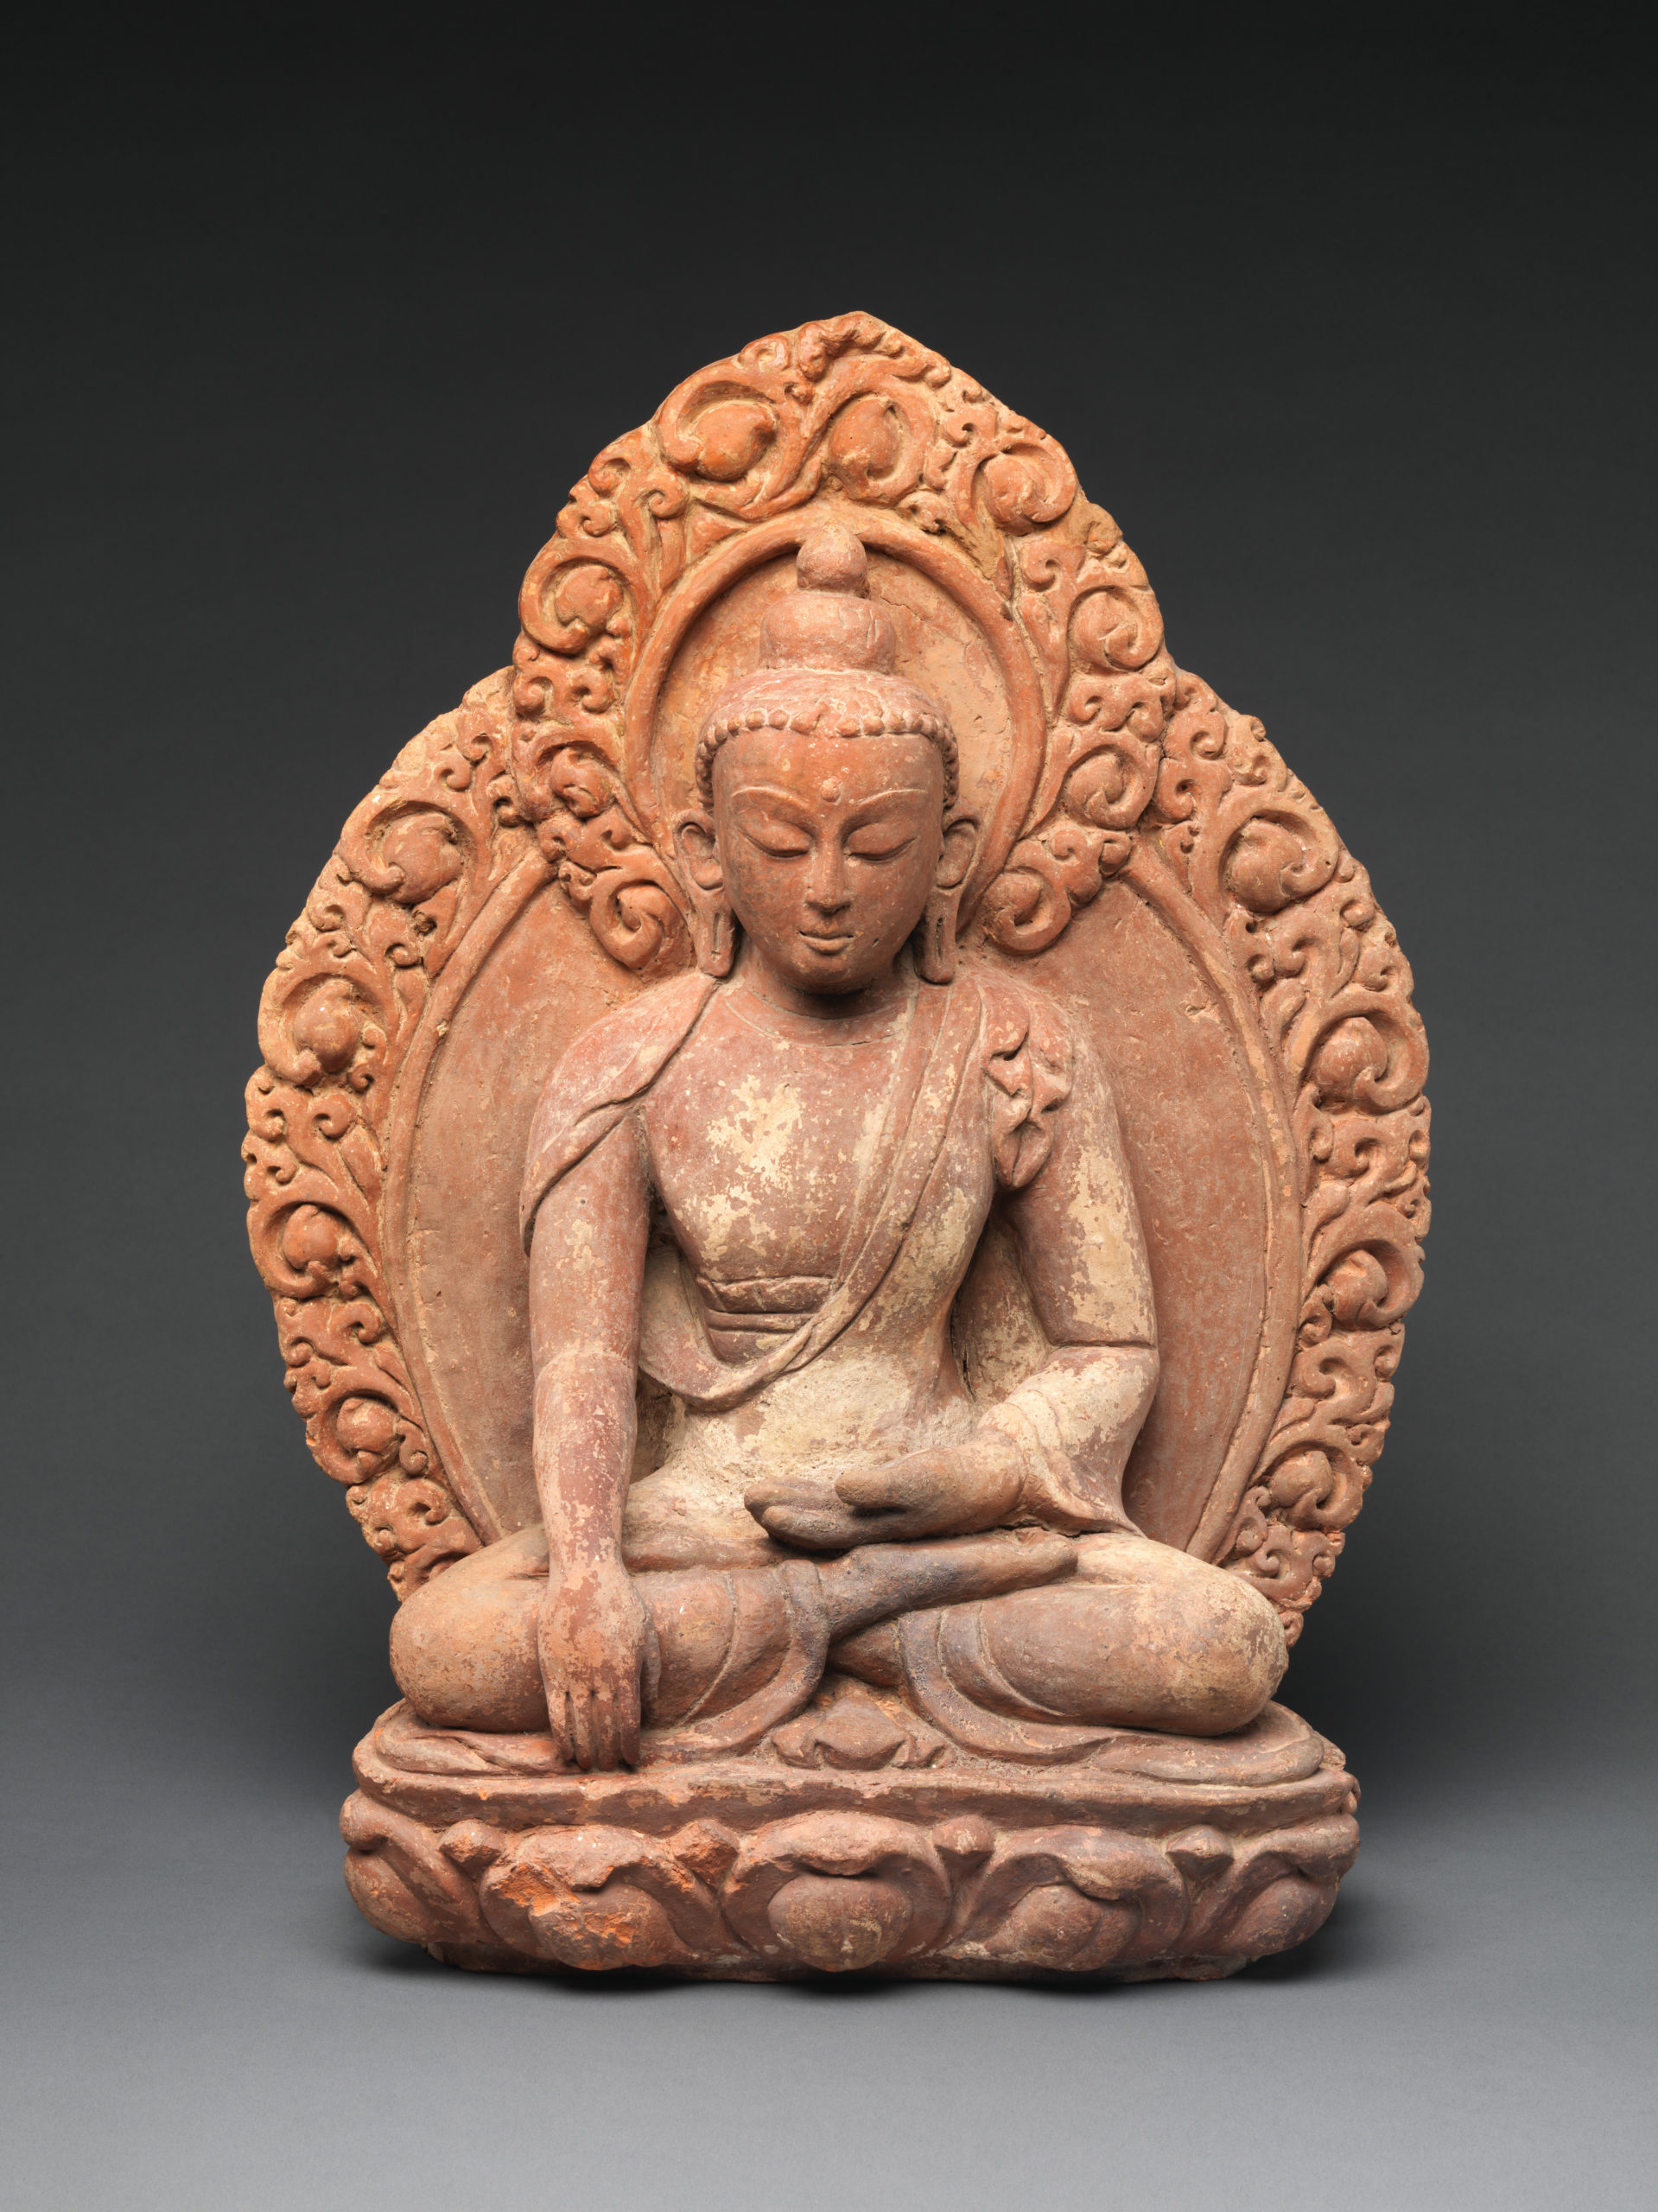 Buddha Statues: History, Use & Meaning | Buddho.org